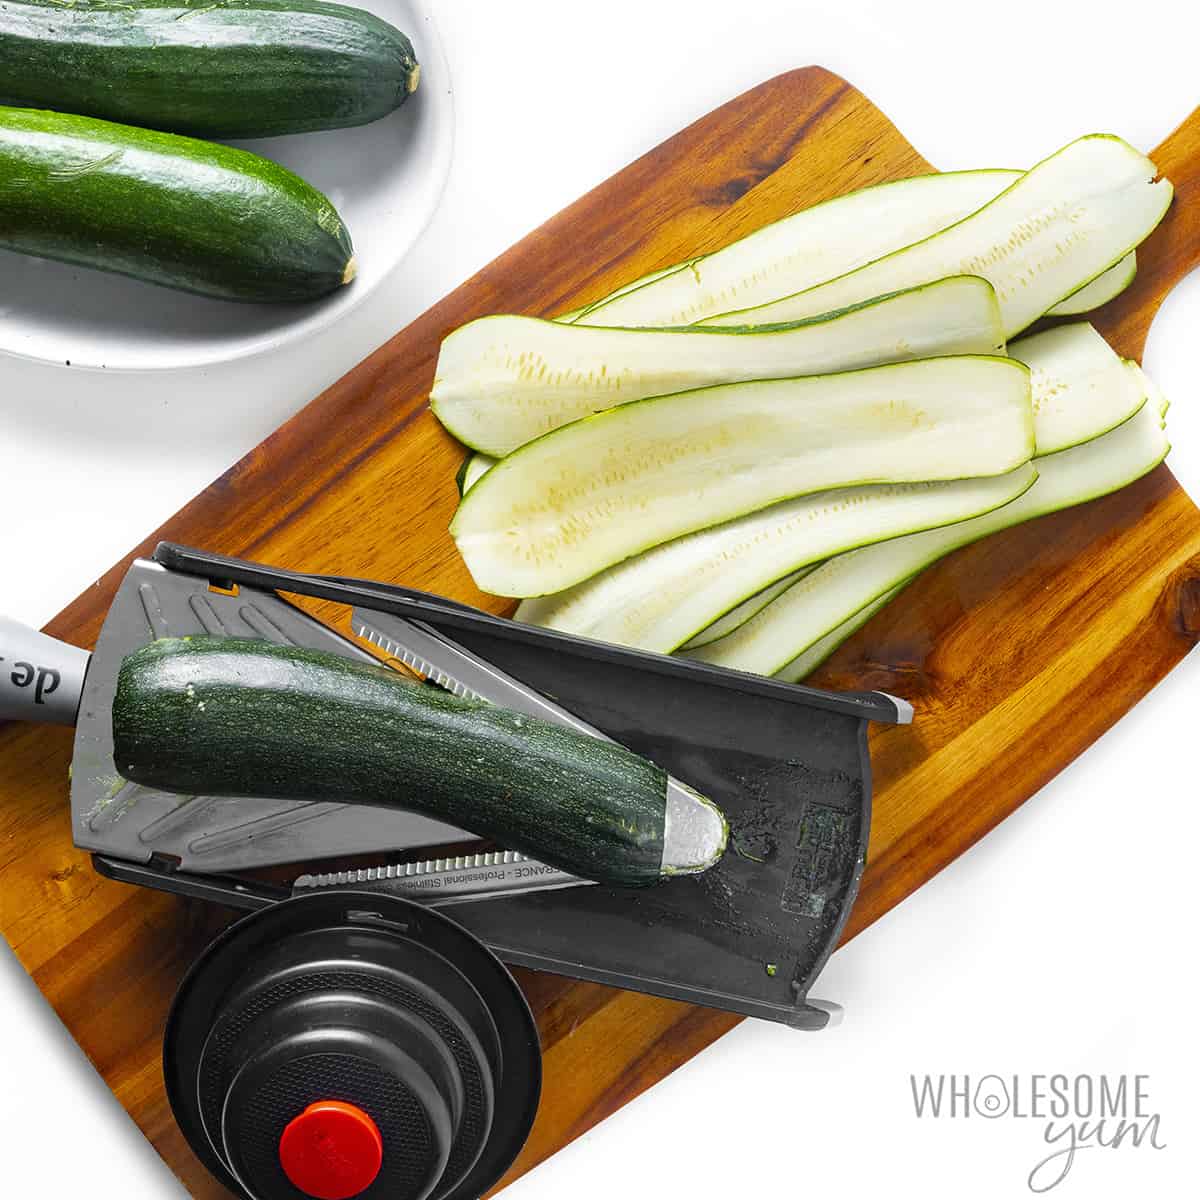 Cut the zucchini into strips.